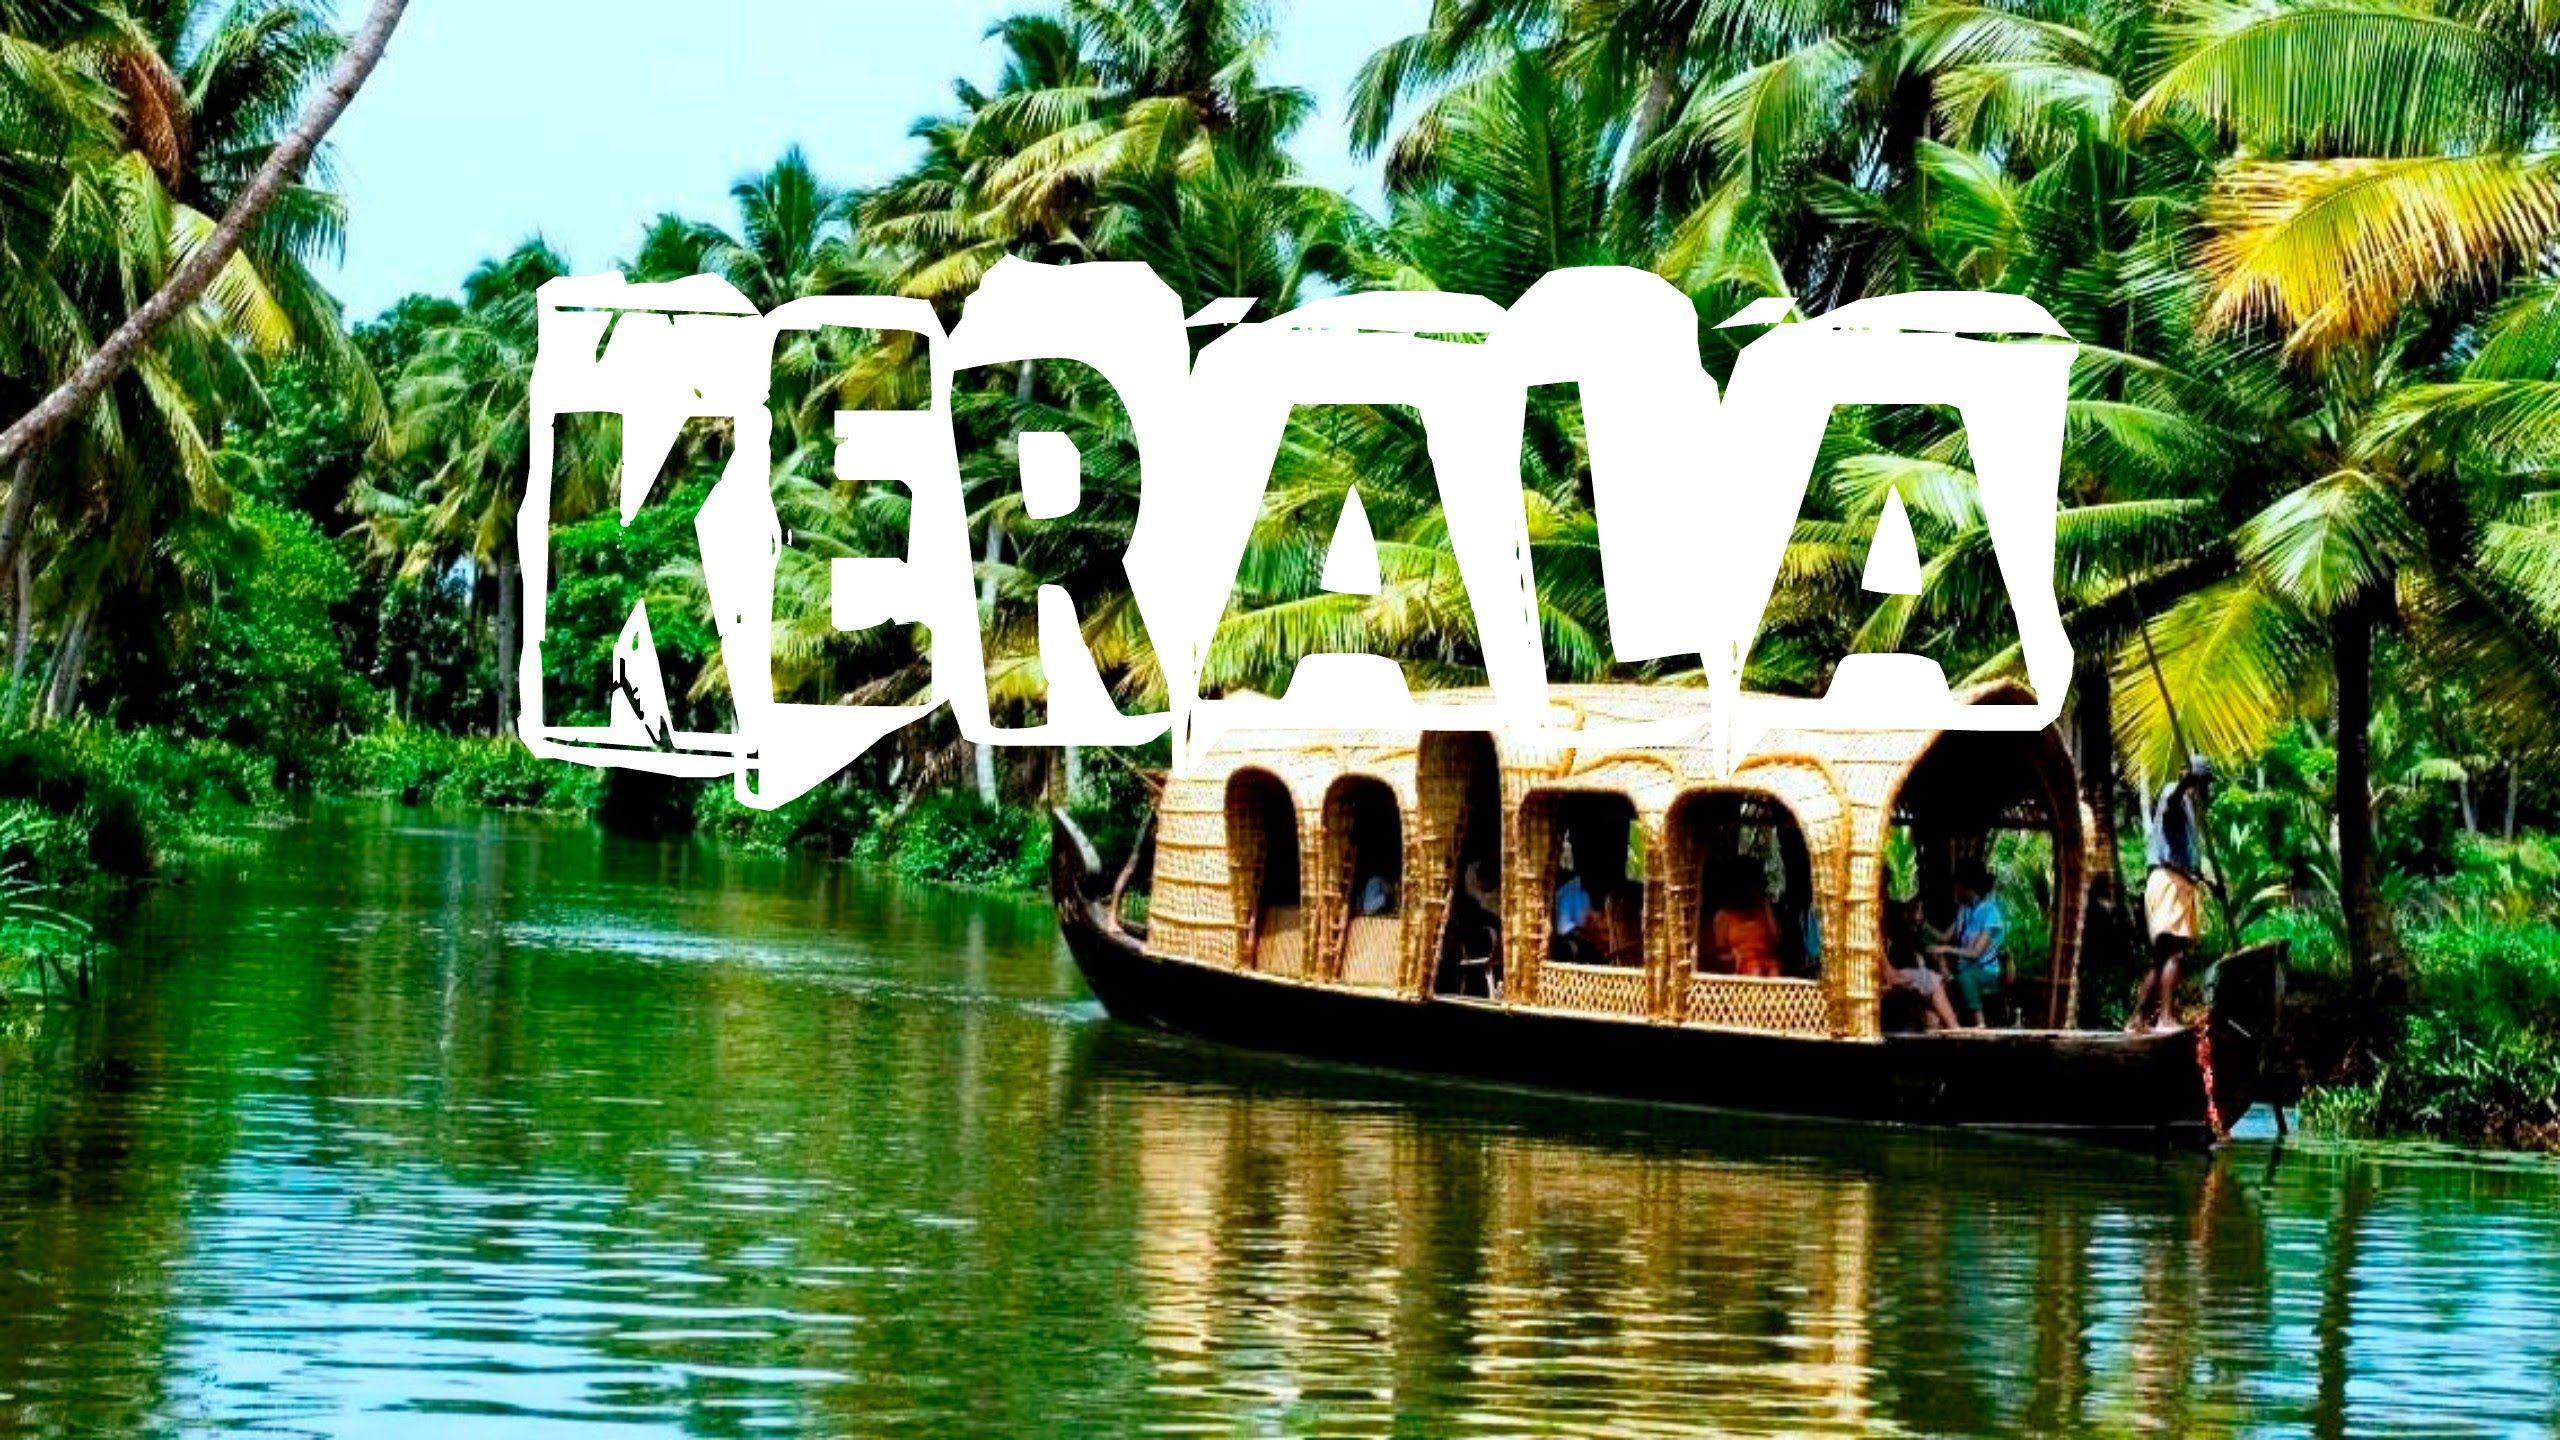 kerala tourism about us